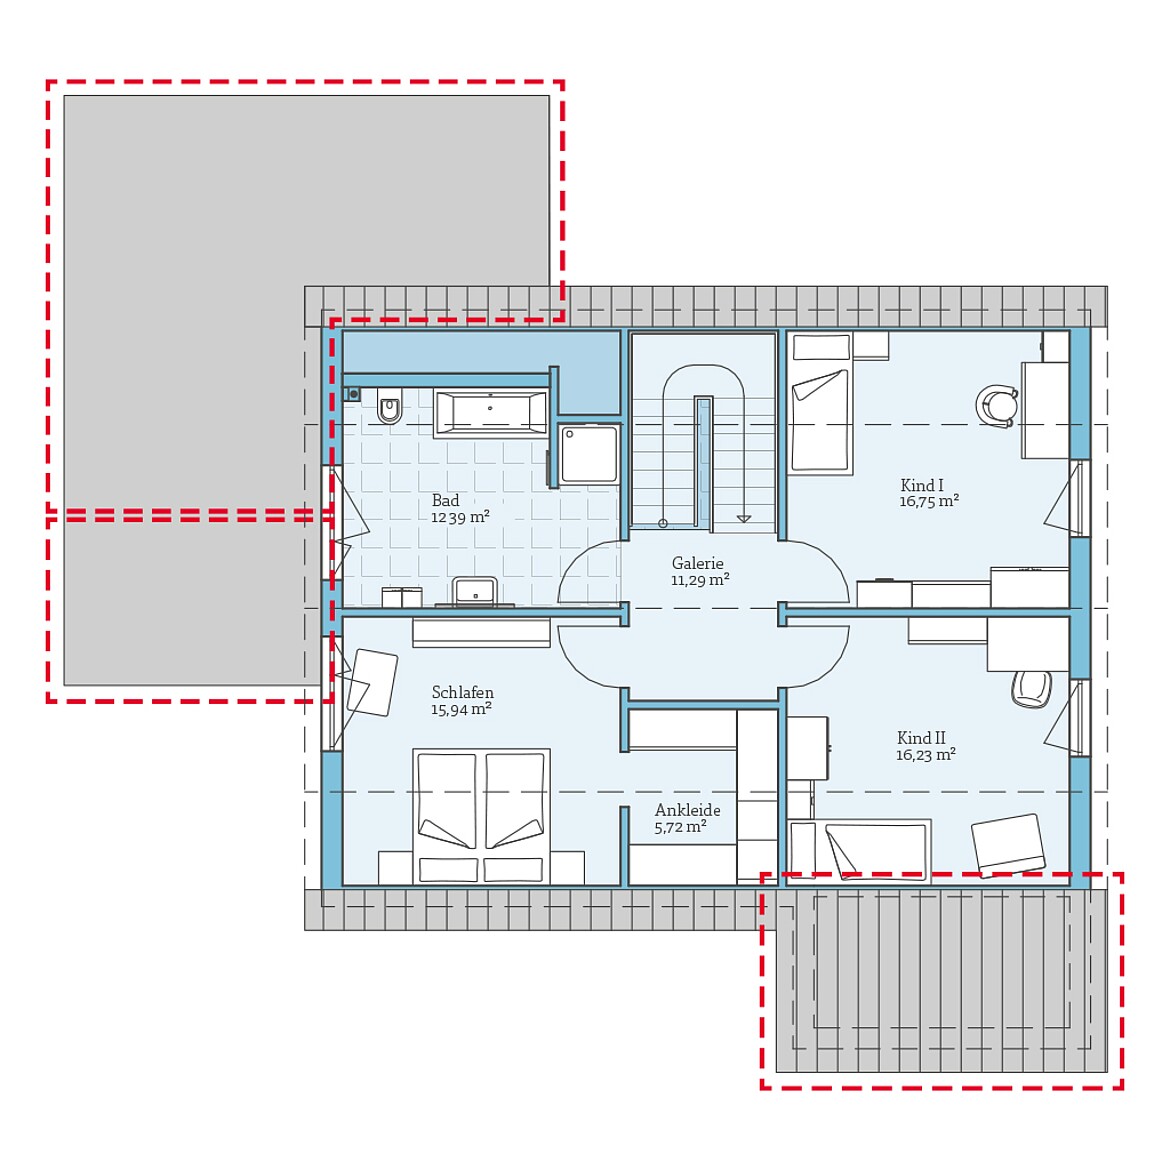 Prefabricated house Variant 35-161: Top floor plan option